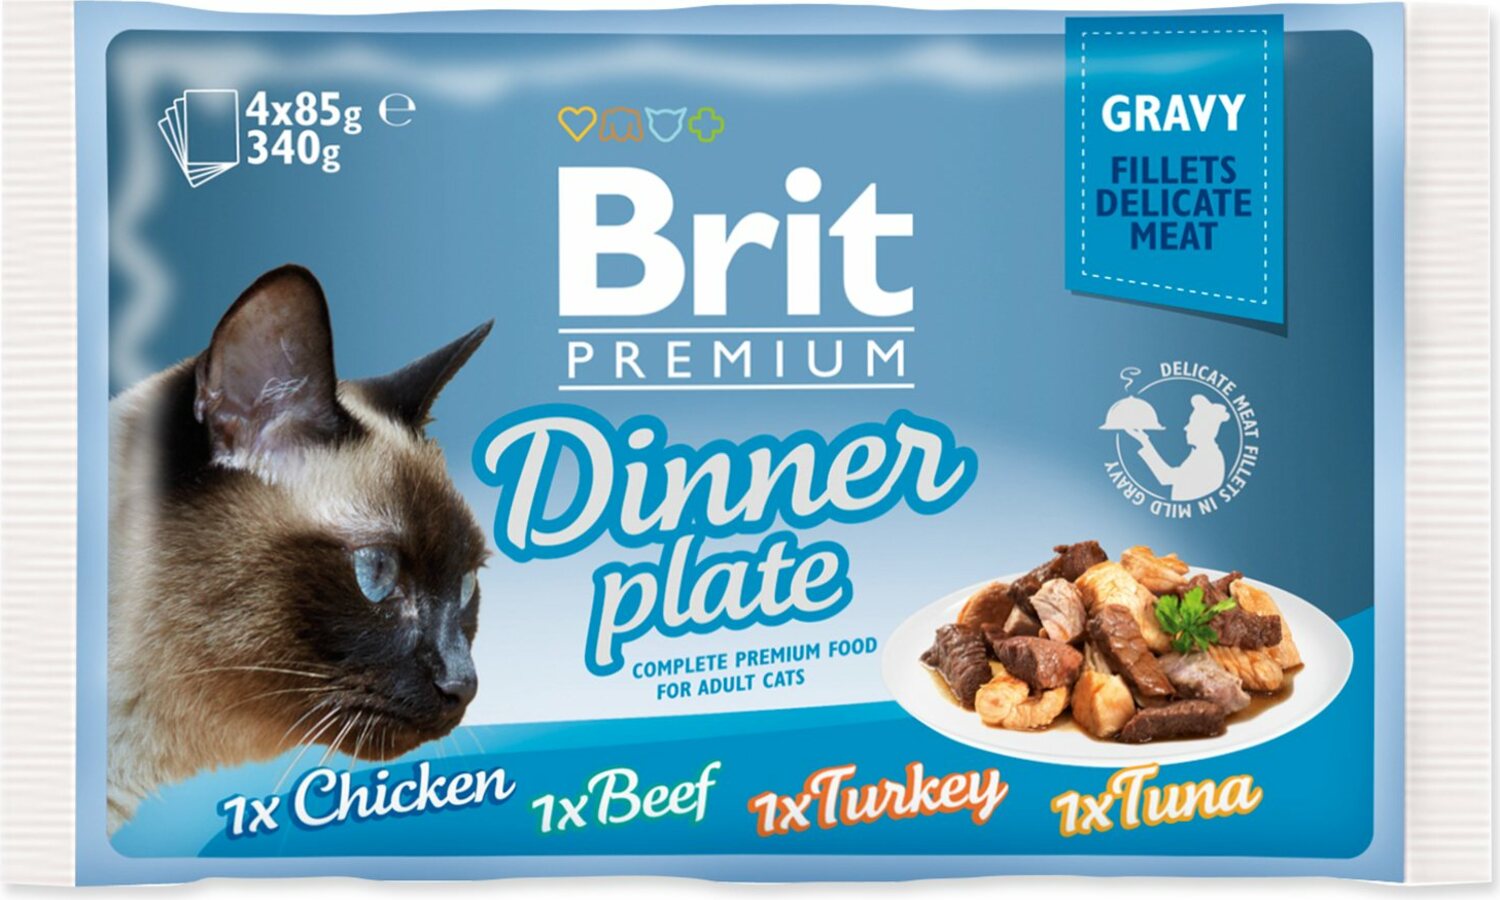 Kapsička Brit Premium Cat Delicate Dinner Plate, filety v omáčce Multi 340g (4x85g)